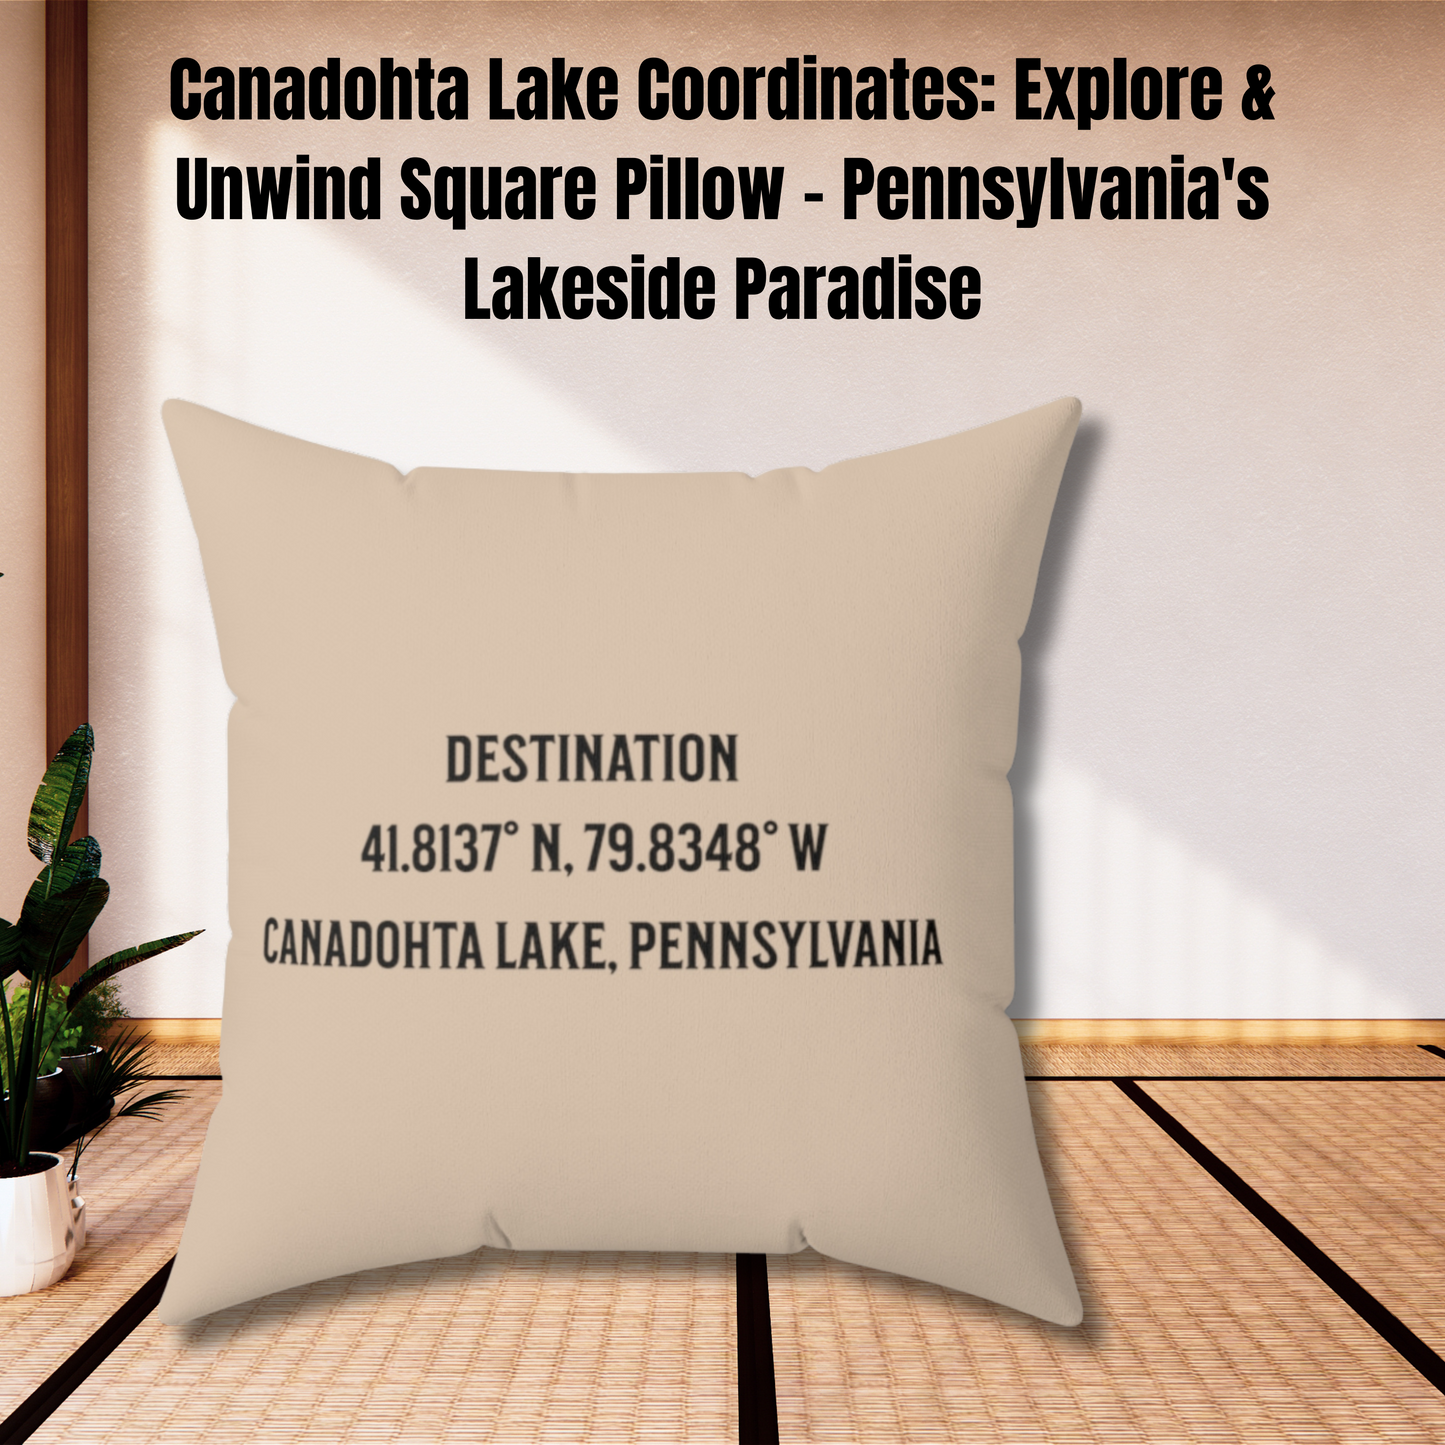 Canadohta Lake Coordinates: Explore & Unwind Square Pillow – Pennsylvania's Lakeside Paradise